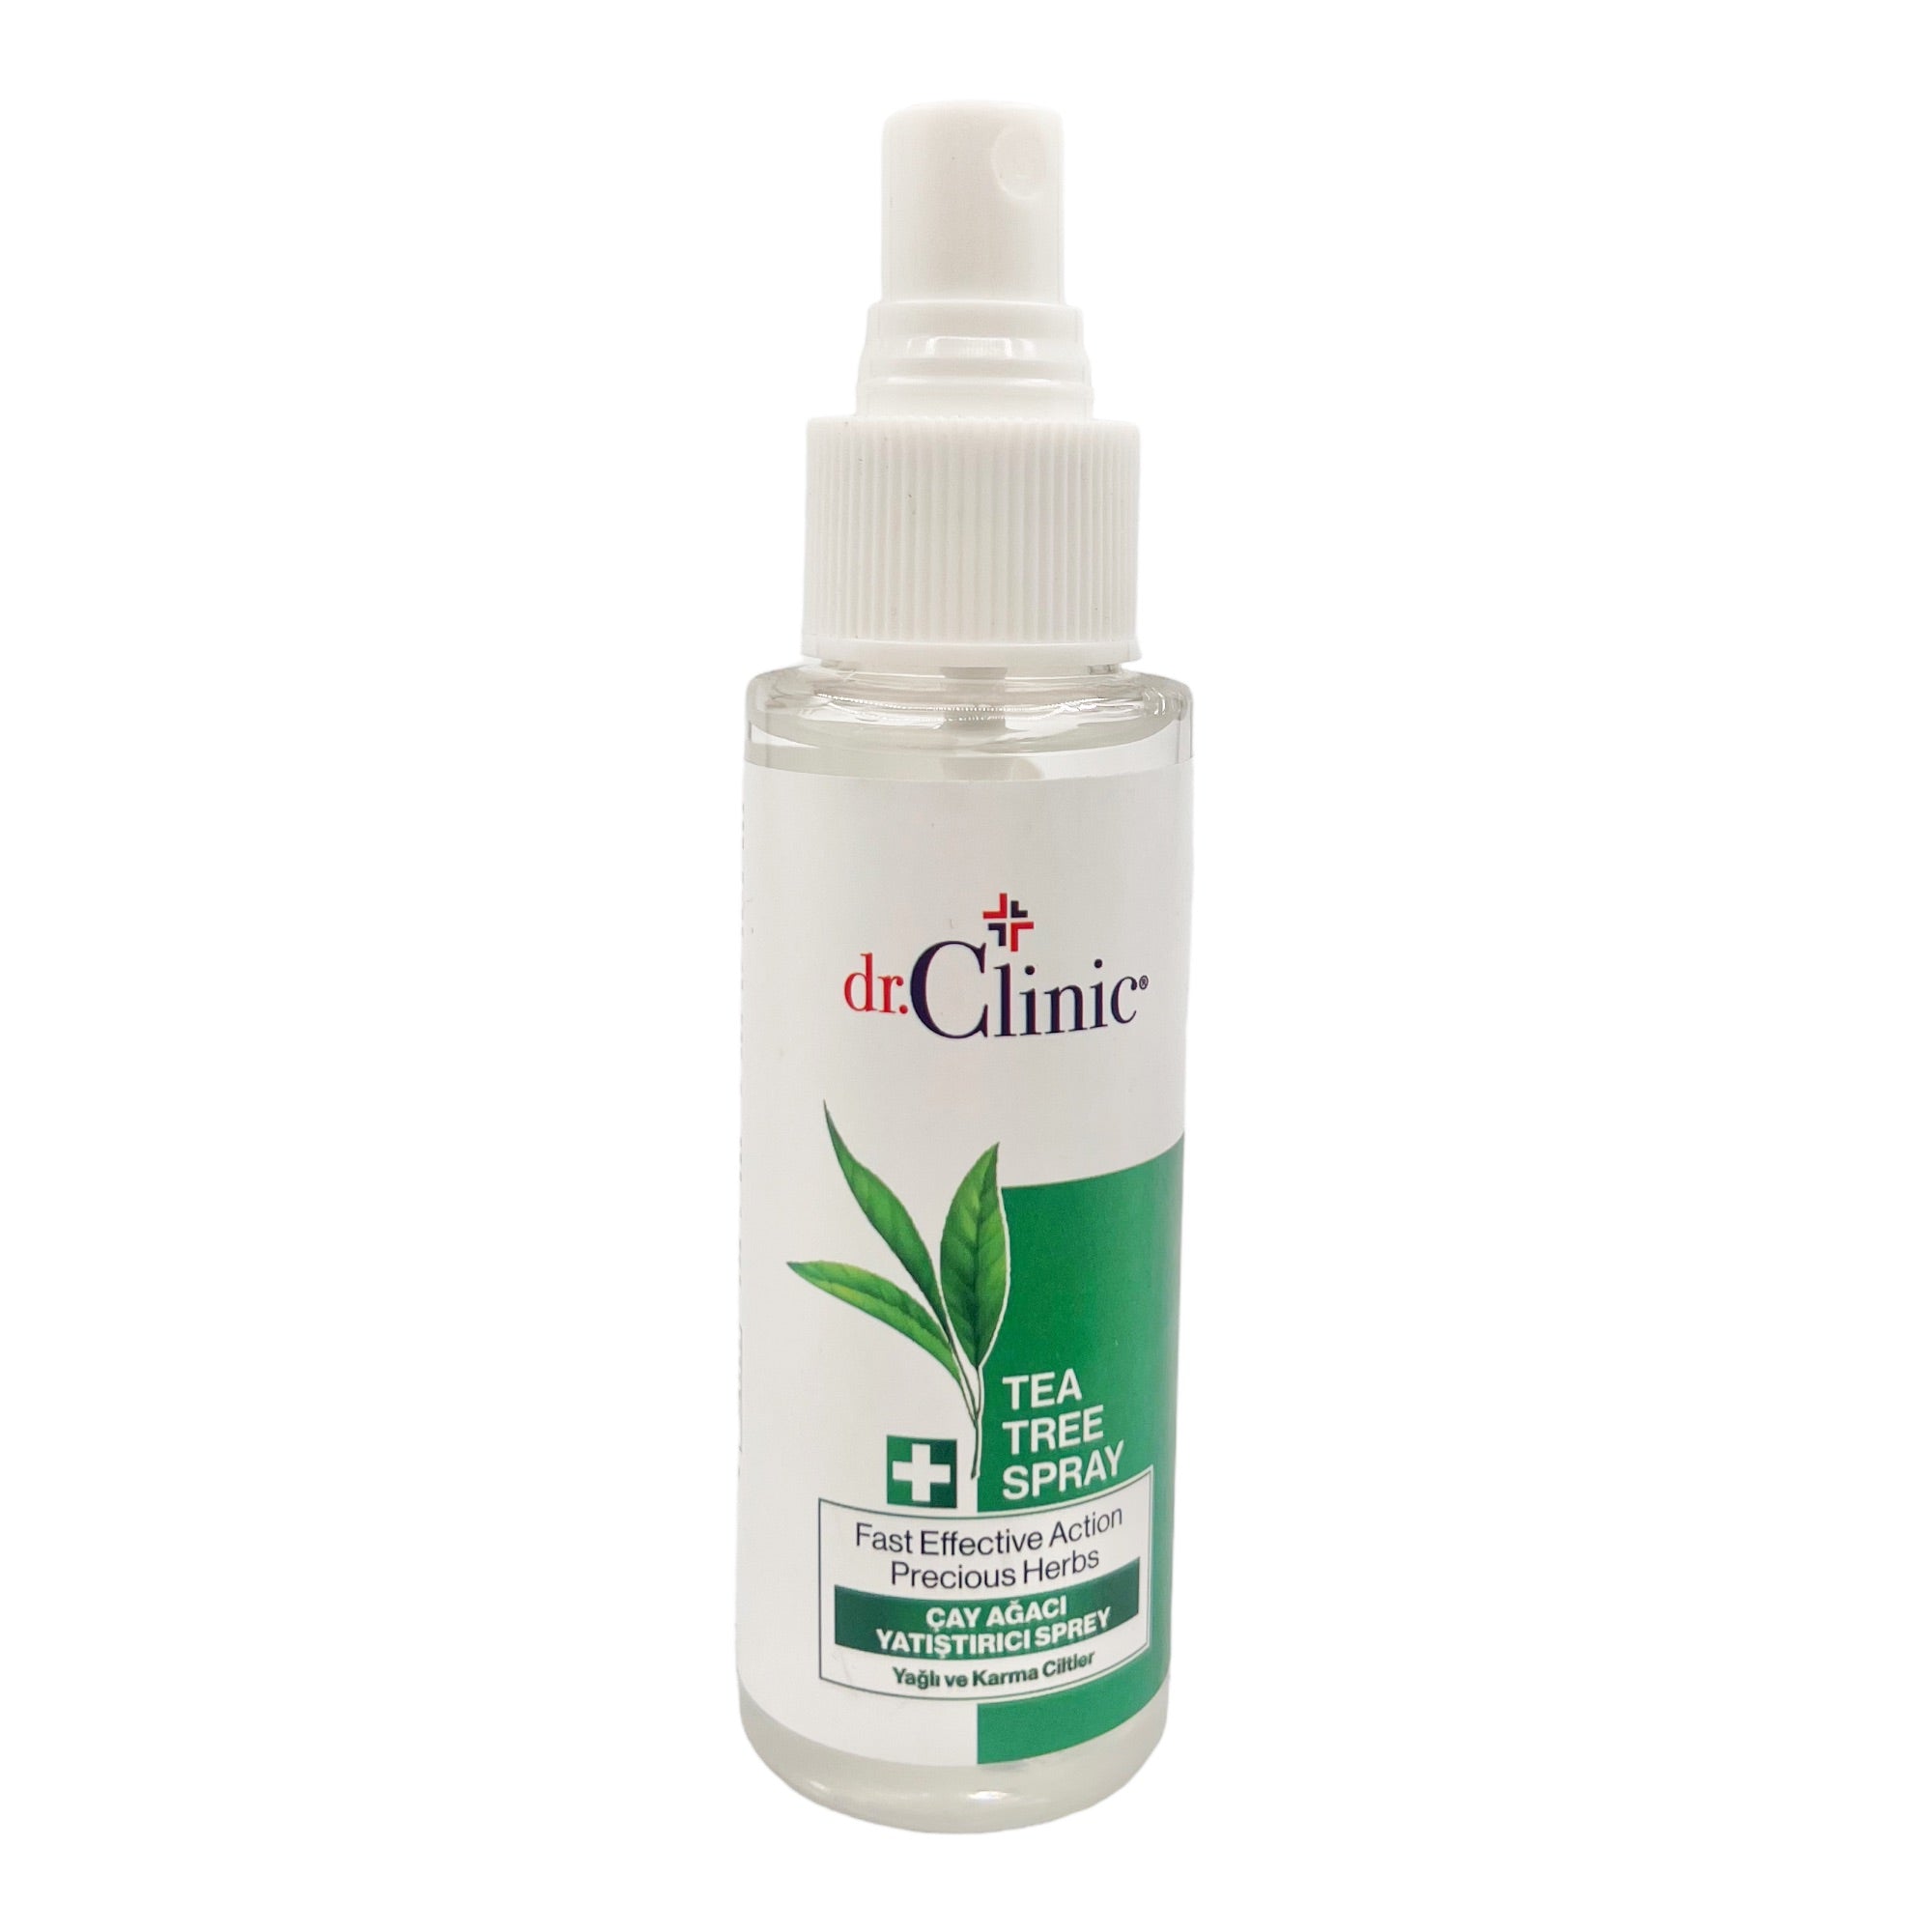 Dr.Clinic - Tea Tree Spray 75ml - Eson Direct